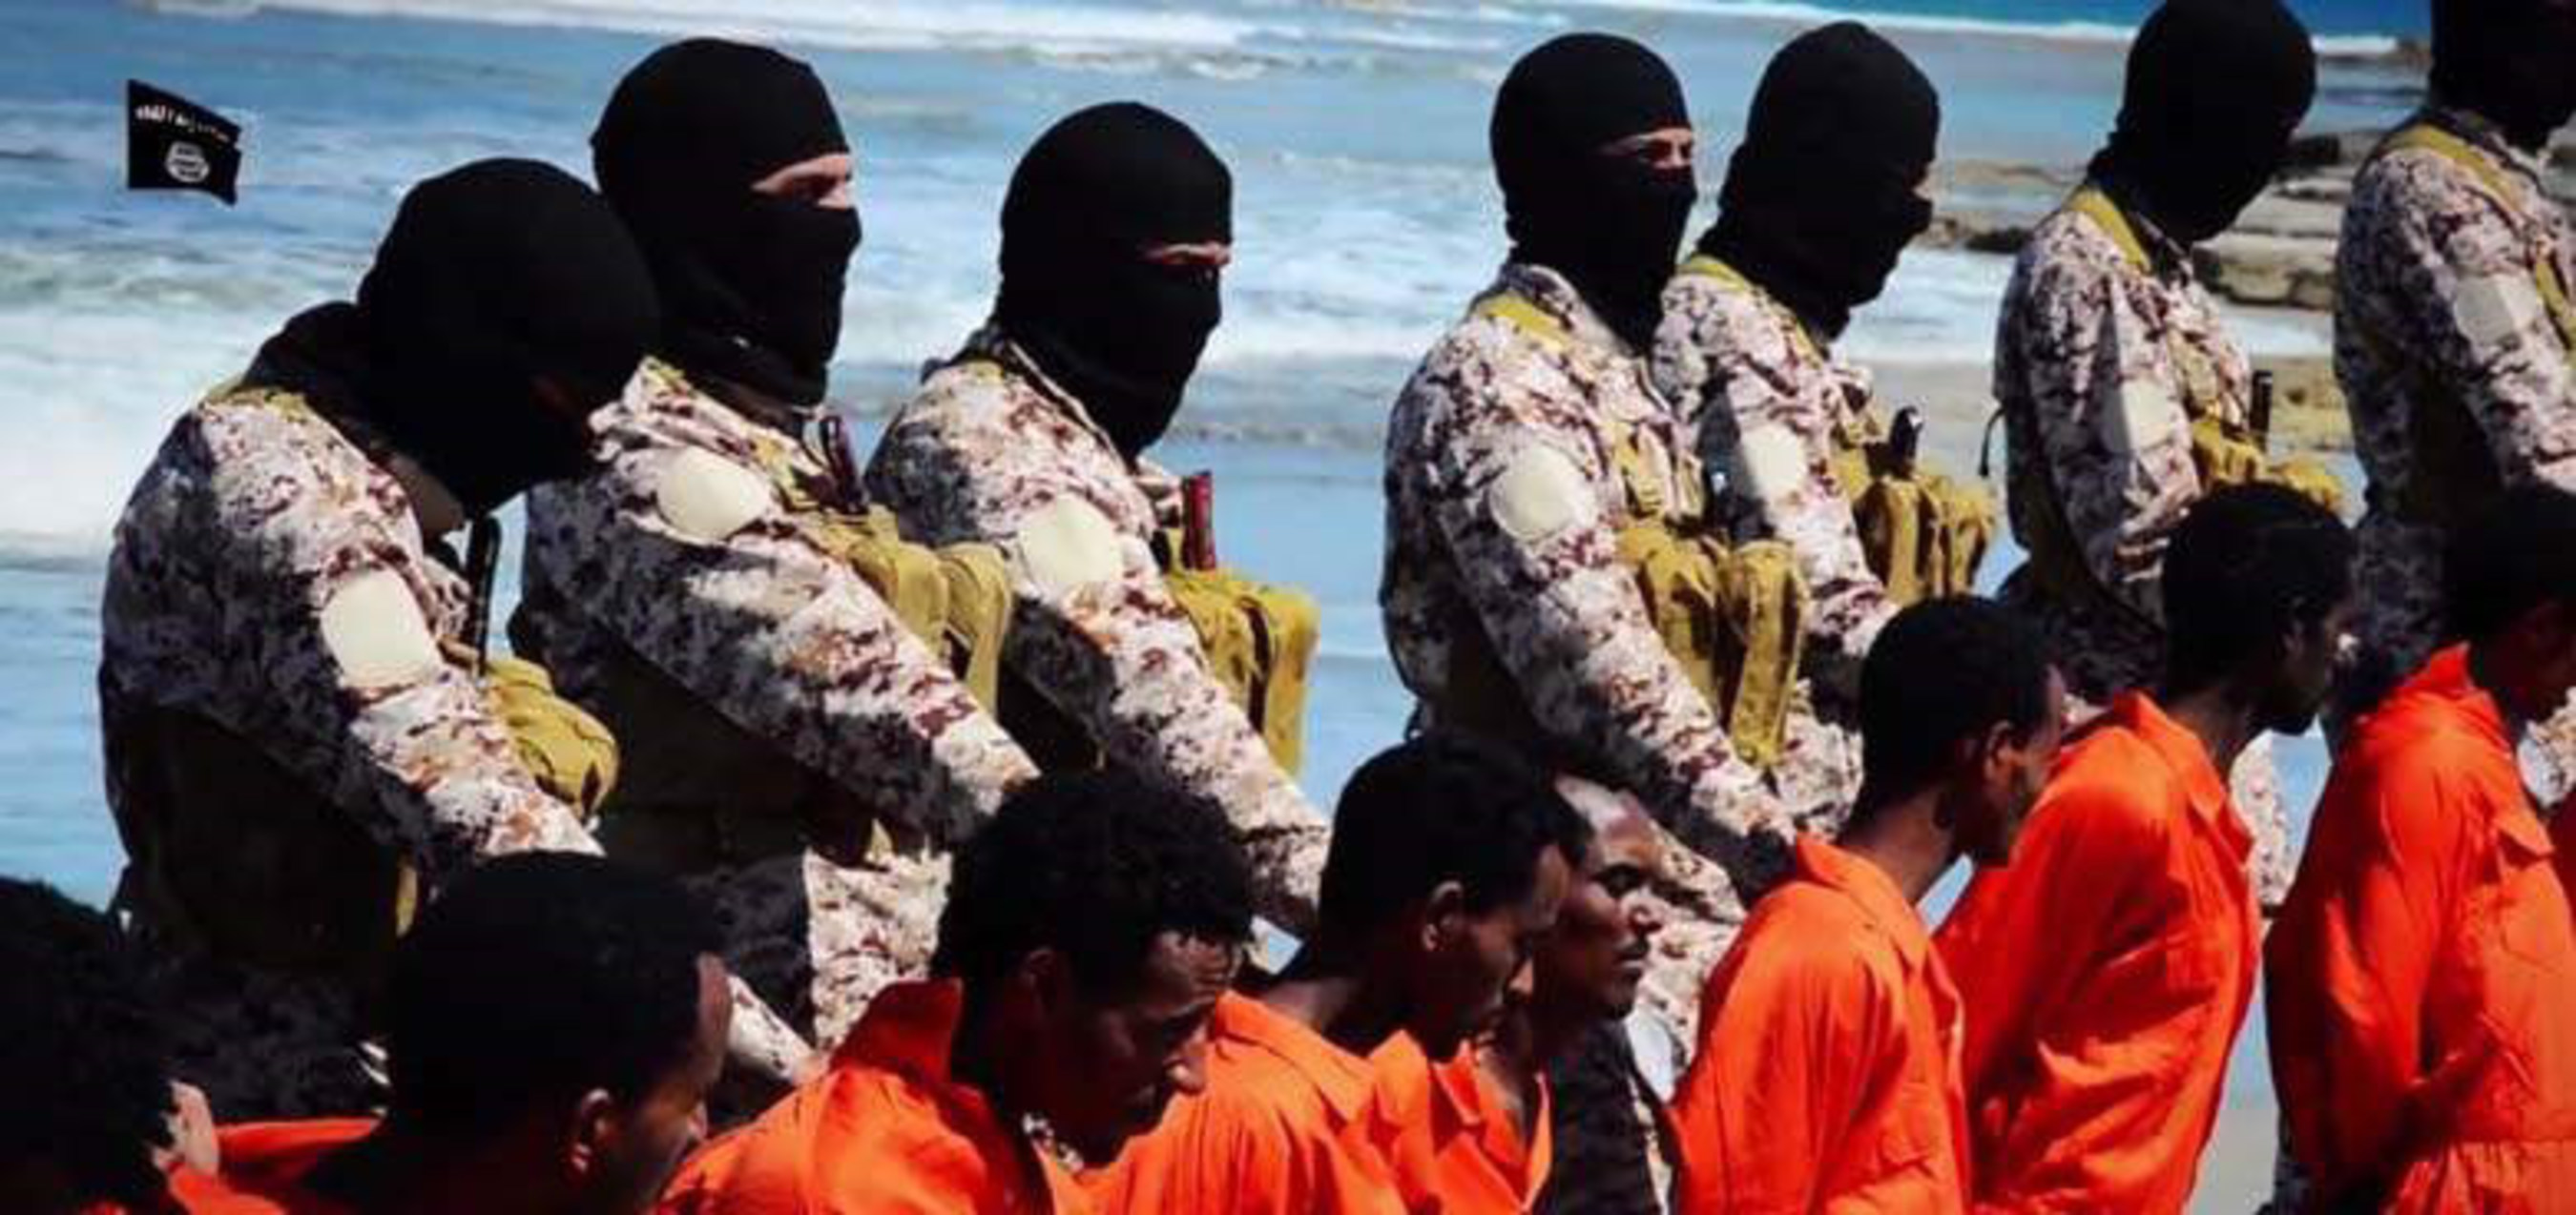 ISIS Beheads Ethiopian Christians on Libyan Beach